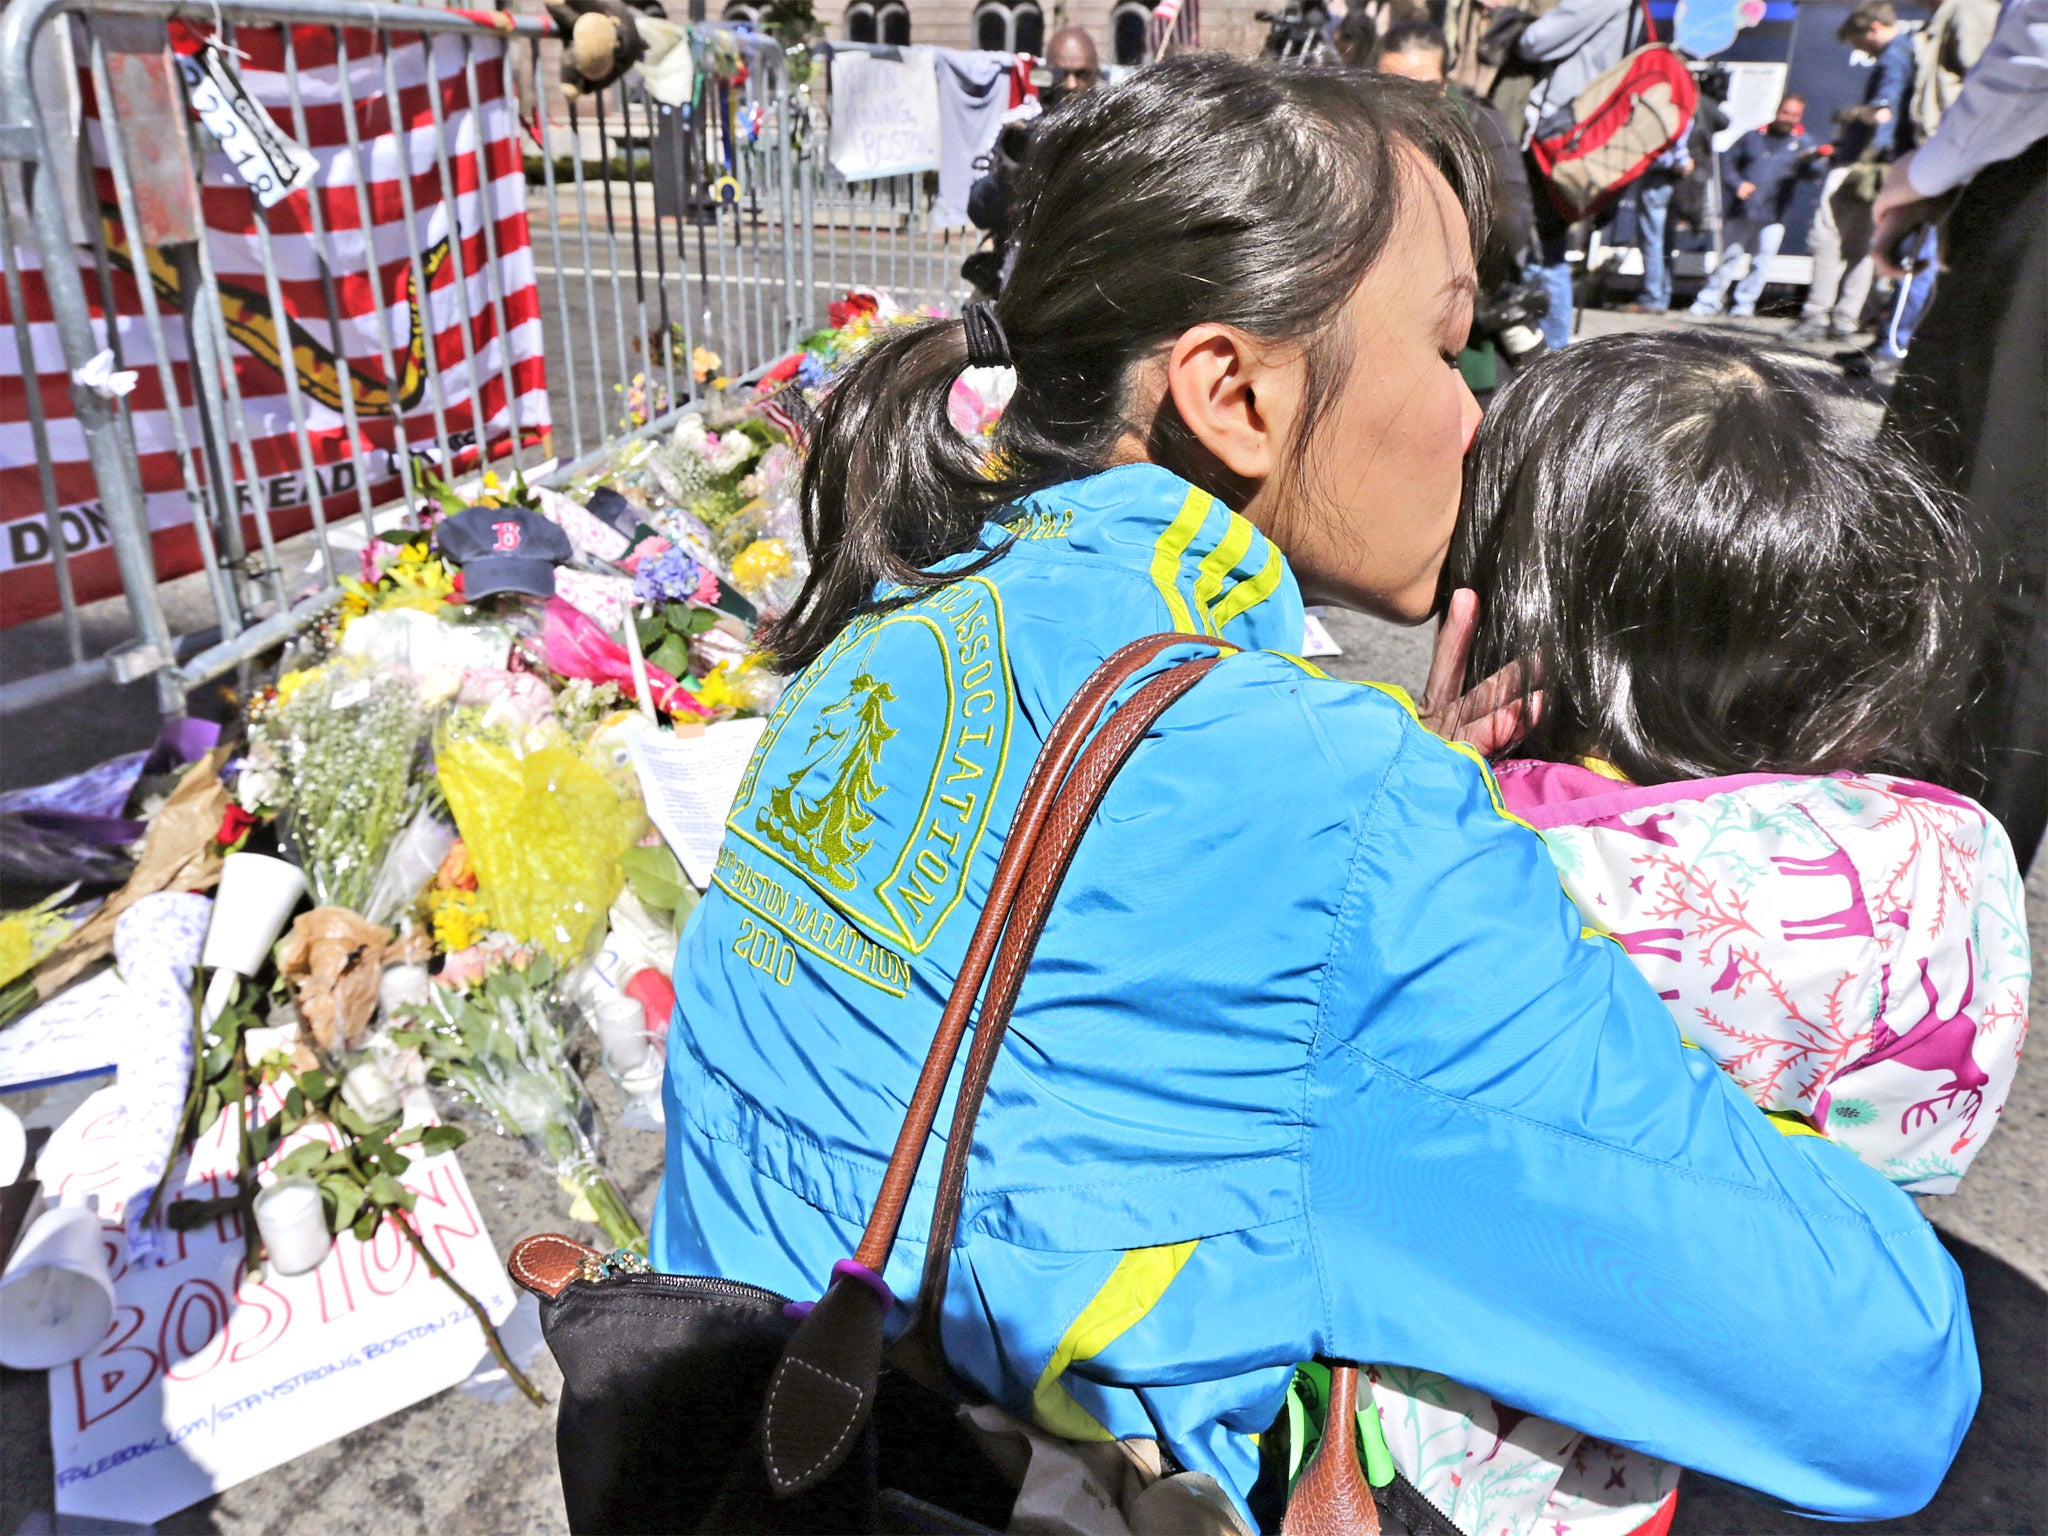 Marathon runner Vu Trang kisses her two-year-old daughter Cara at a memorial in Boylston Street